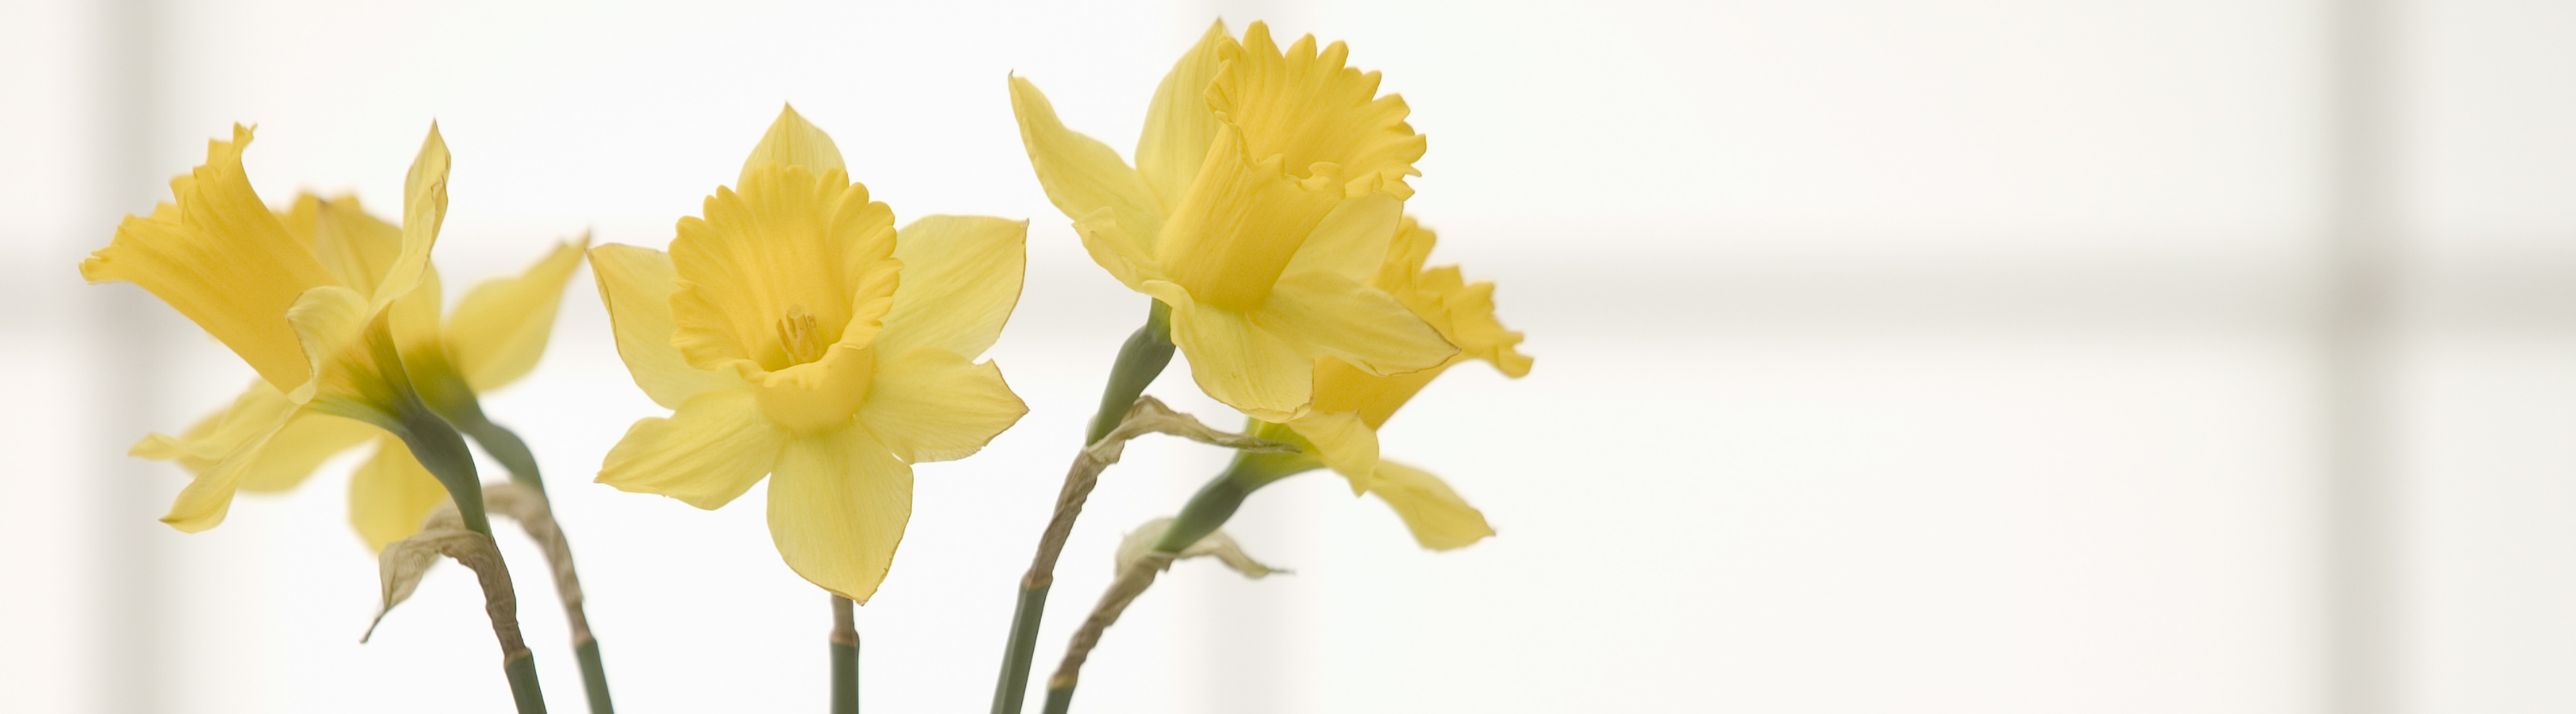 Photograph of yellow daffodils